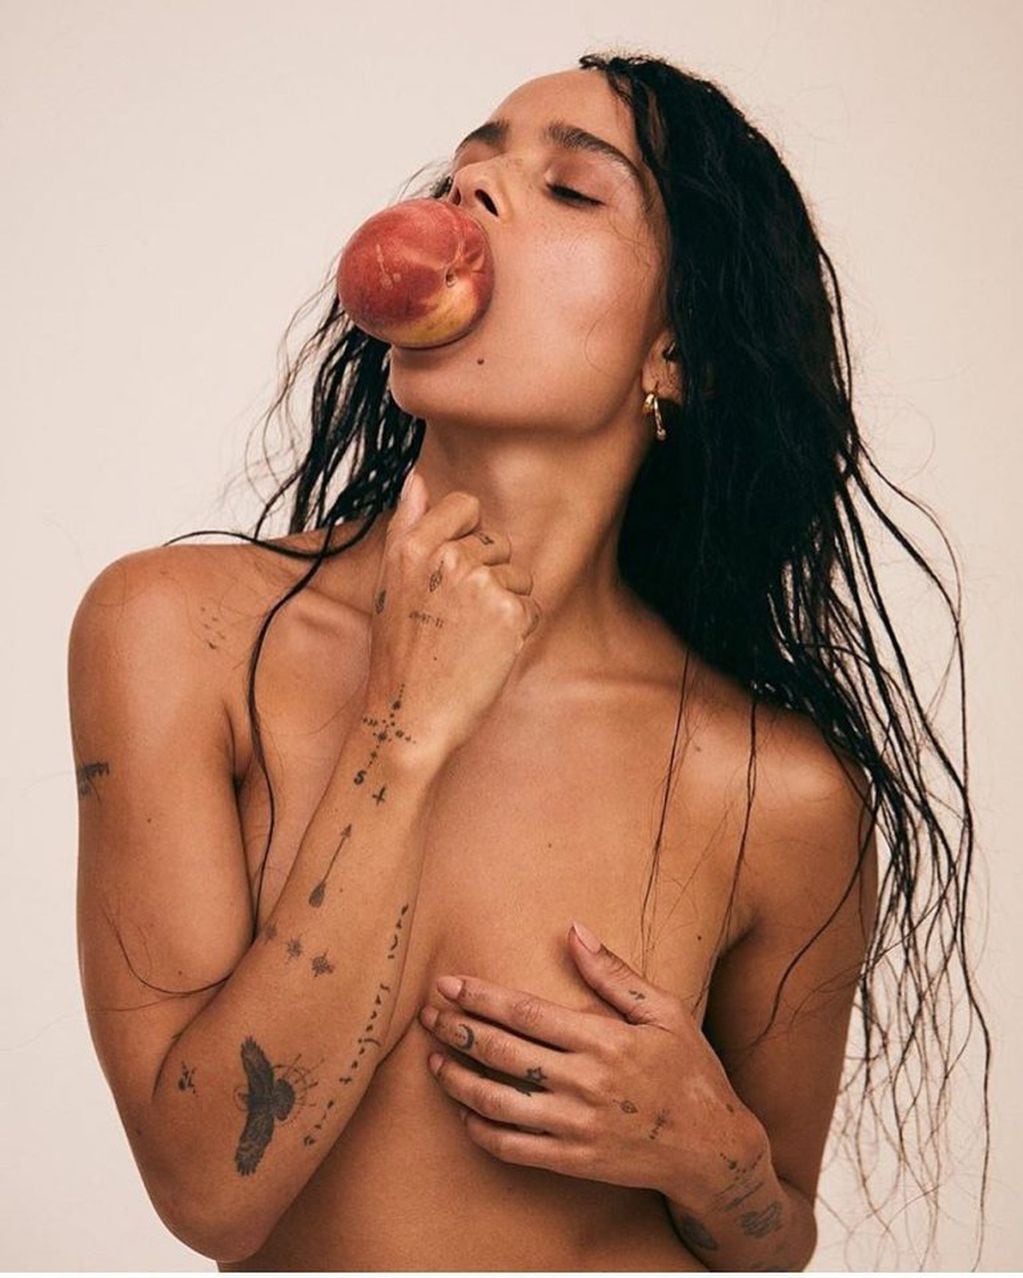 Zoë, la hija de Lenny Kravitz, desafió a Instagram y subió una foto desnuda (Foto: Instagram/ @zoeisabellakravitz)